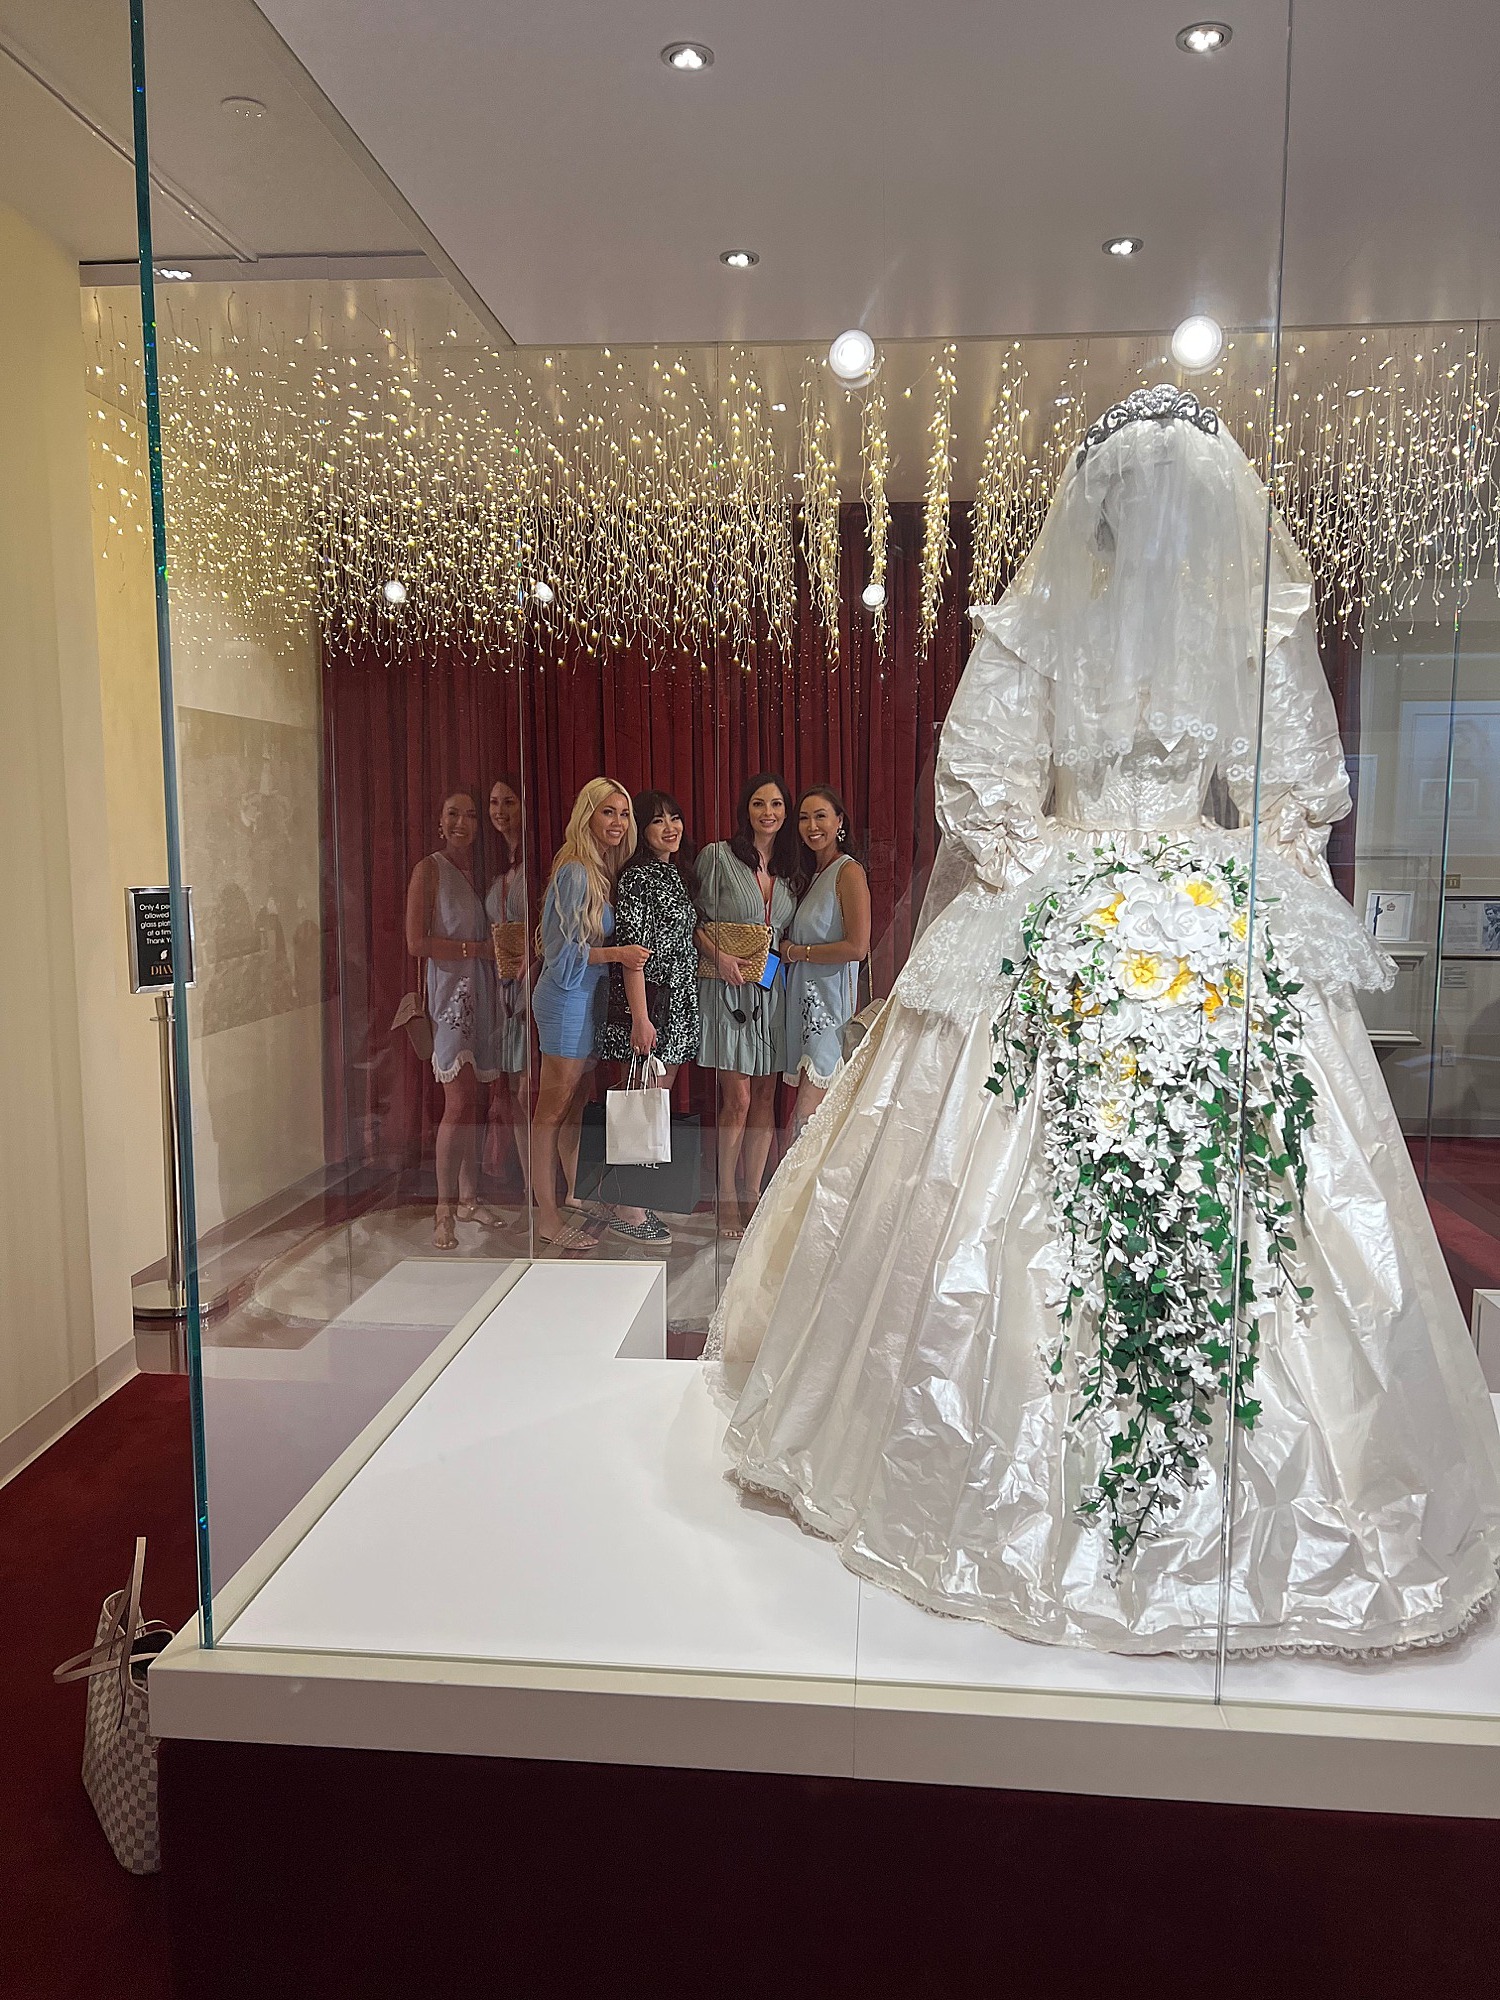 Las Vegas Diana exhibit princess Diana wedding gown replica